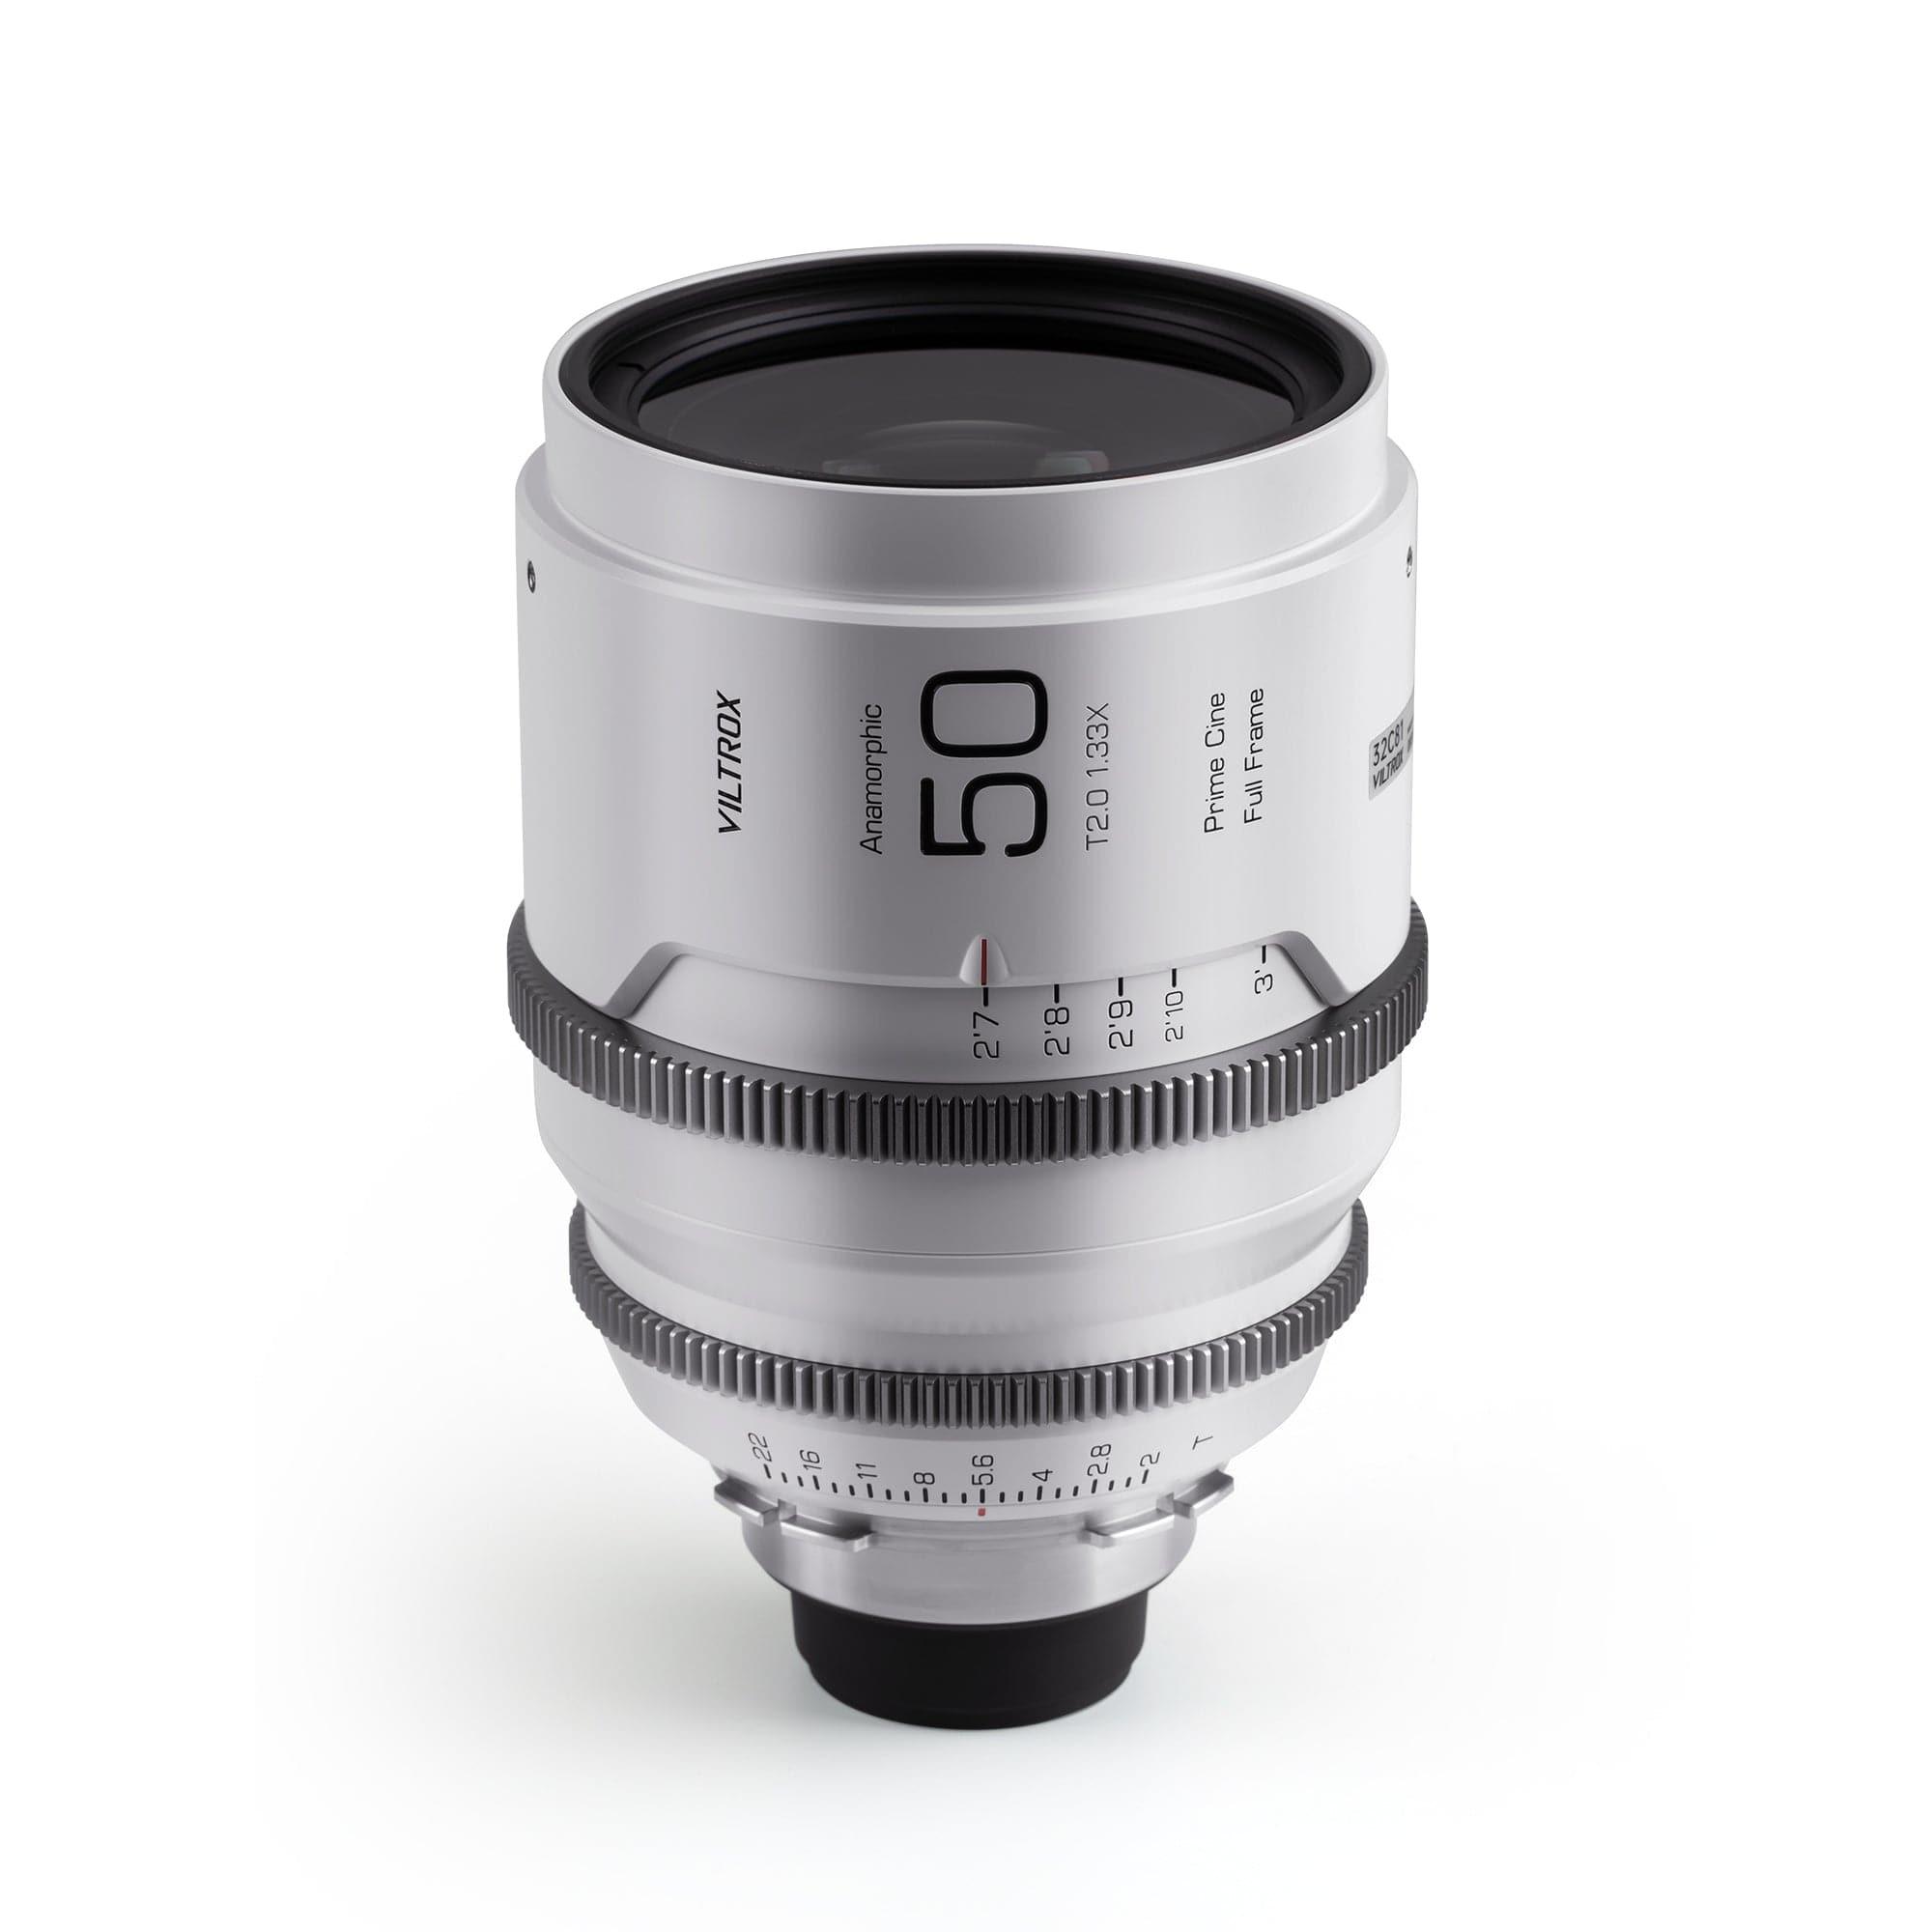 VILTROX Brand New EPIC Series 50mm T2.0 1.33X PL Mount Anamorphic Prime Cine Lens - Digitek